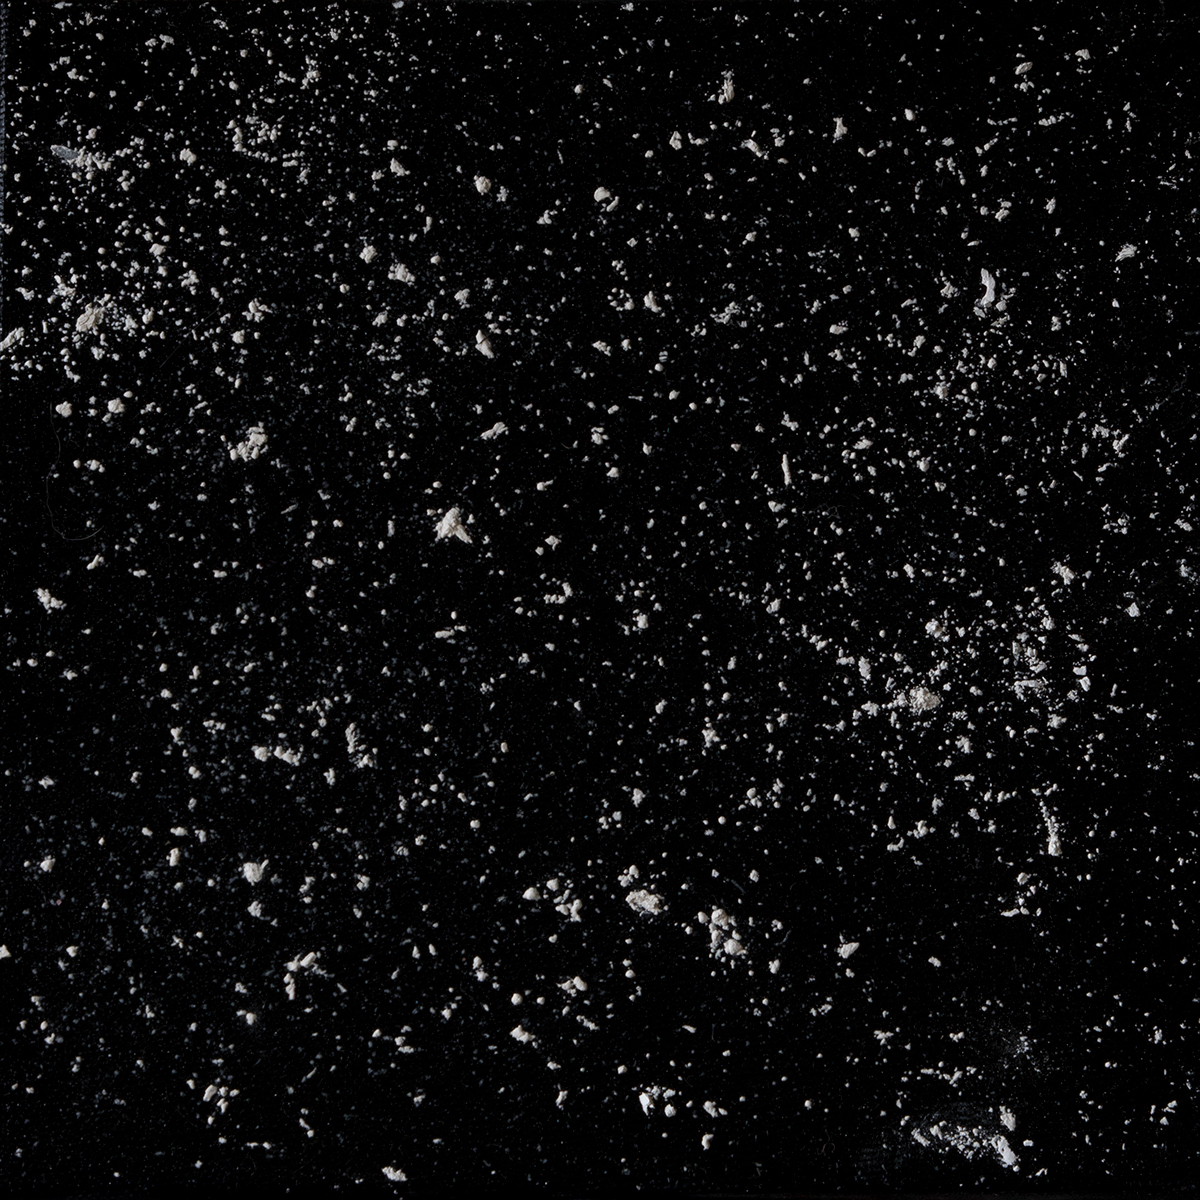 Space  universe painting   experimental abstract night SKY geometric black malarstwo